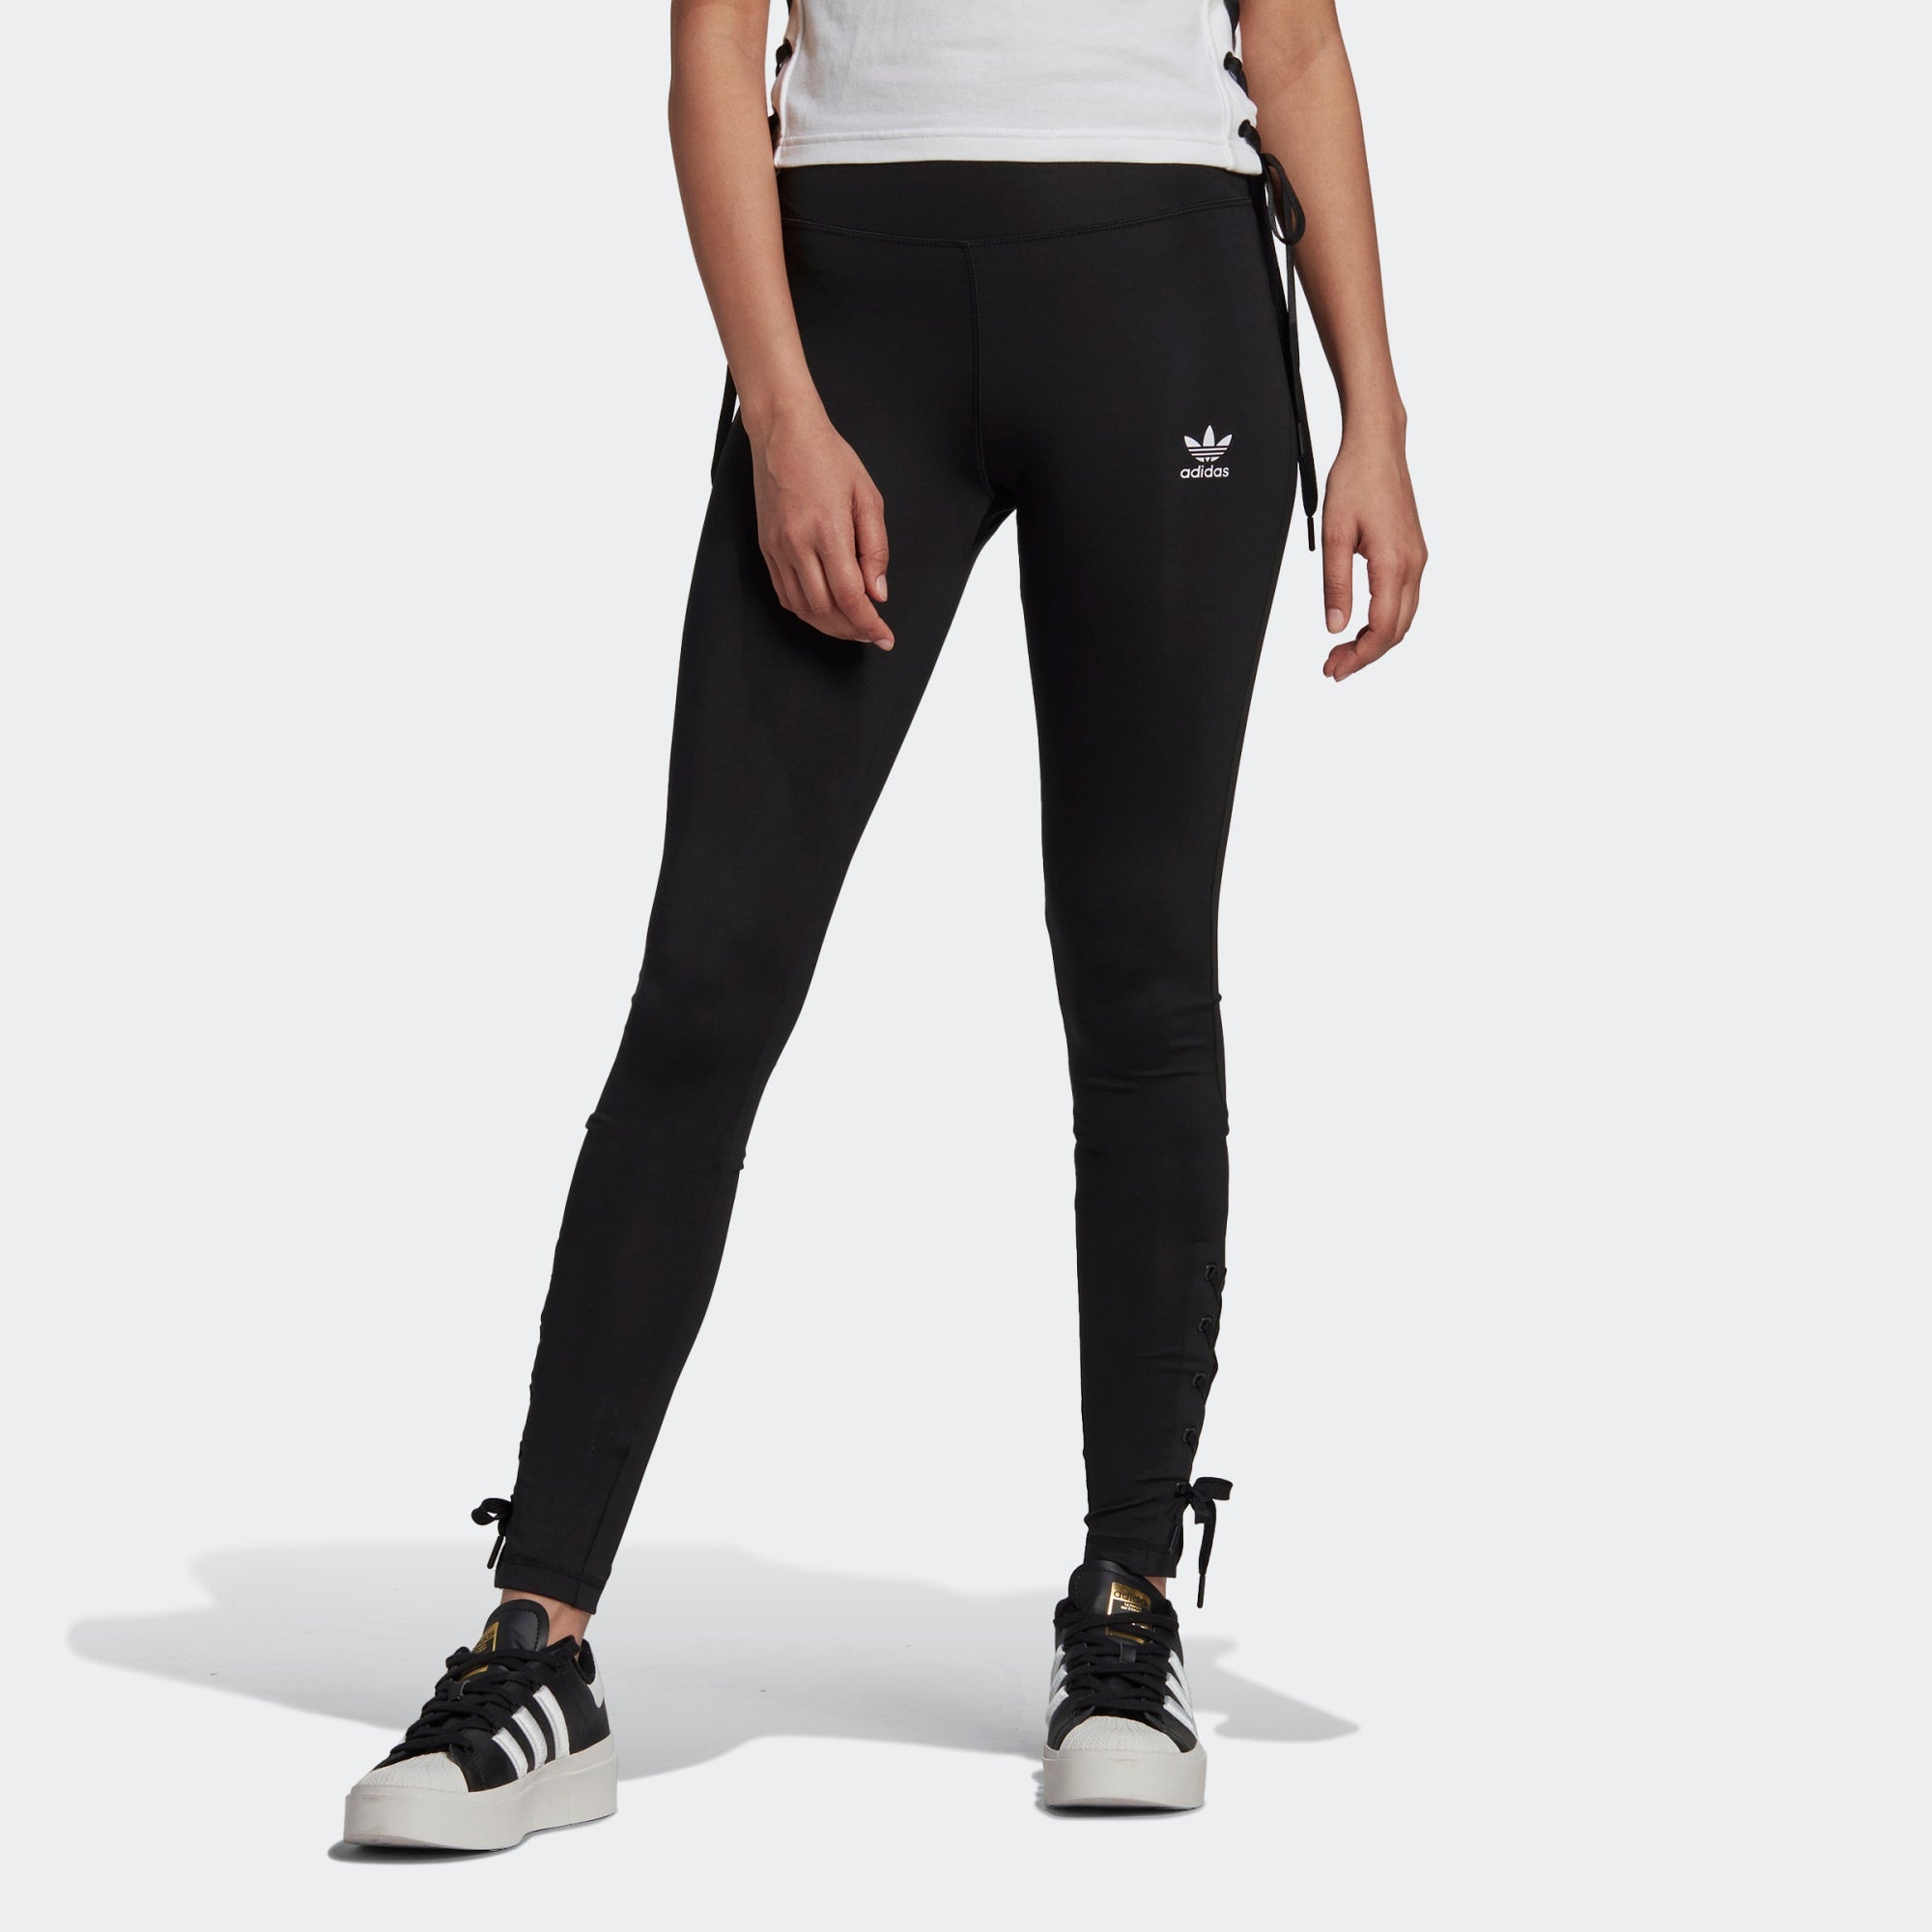 Adidas Women's Criss Cross Legging Black (Plus Size) - Puffer Reds